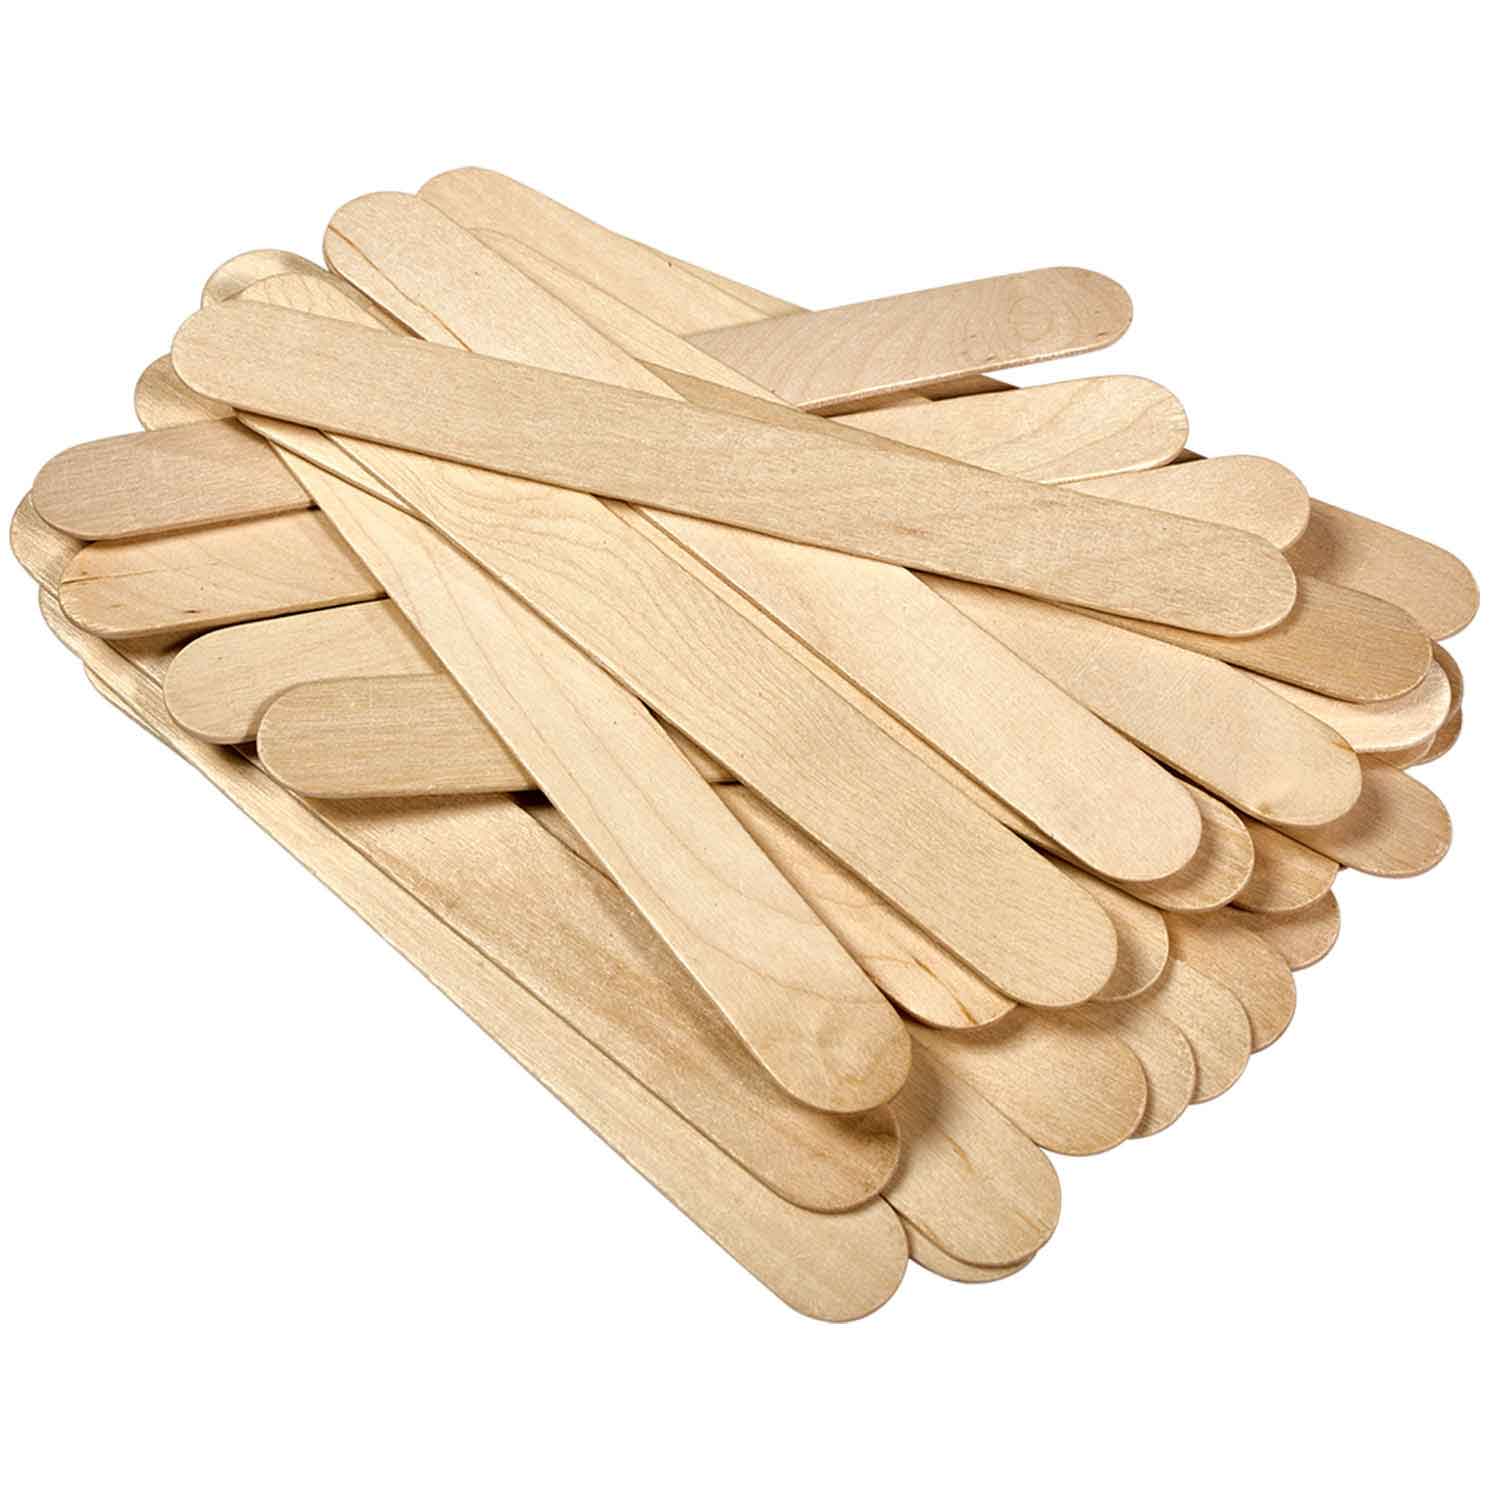 Artful Goods Wood Craft Sticks, Jumbo size, Natural